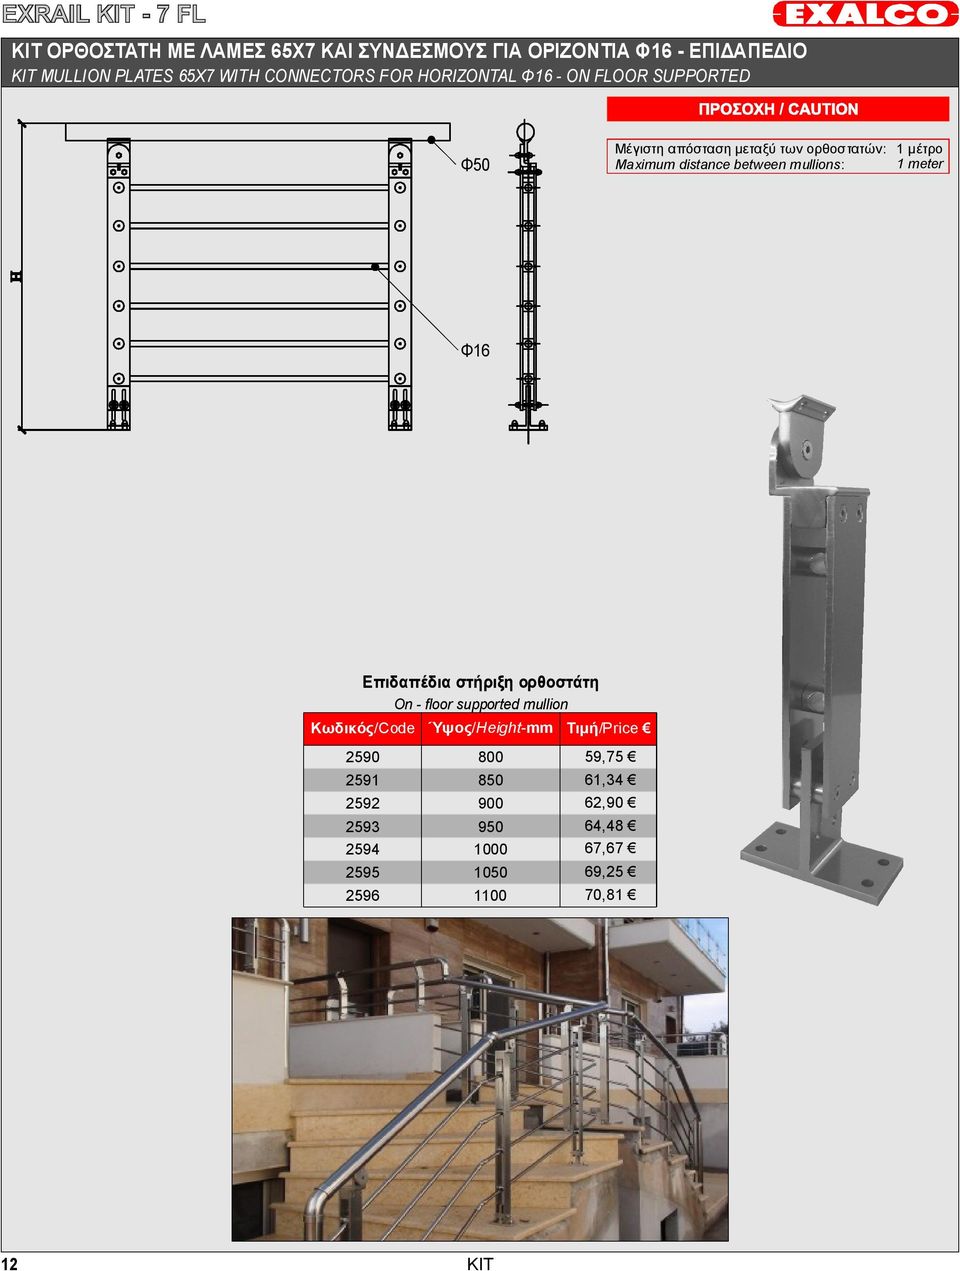 mullions: 1 μέτρο 1meter Φ16 Επιδαπέδια στήριξη ορθοστάτη On -floor supported mullion Κωδικός/Code Ύψος/